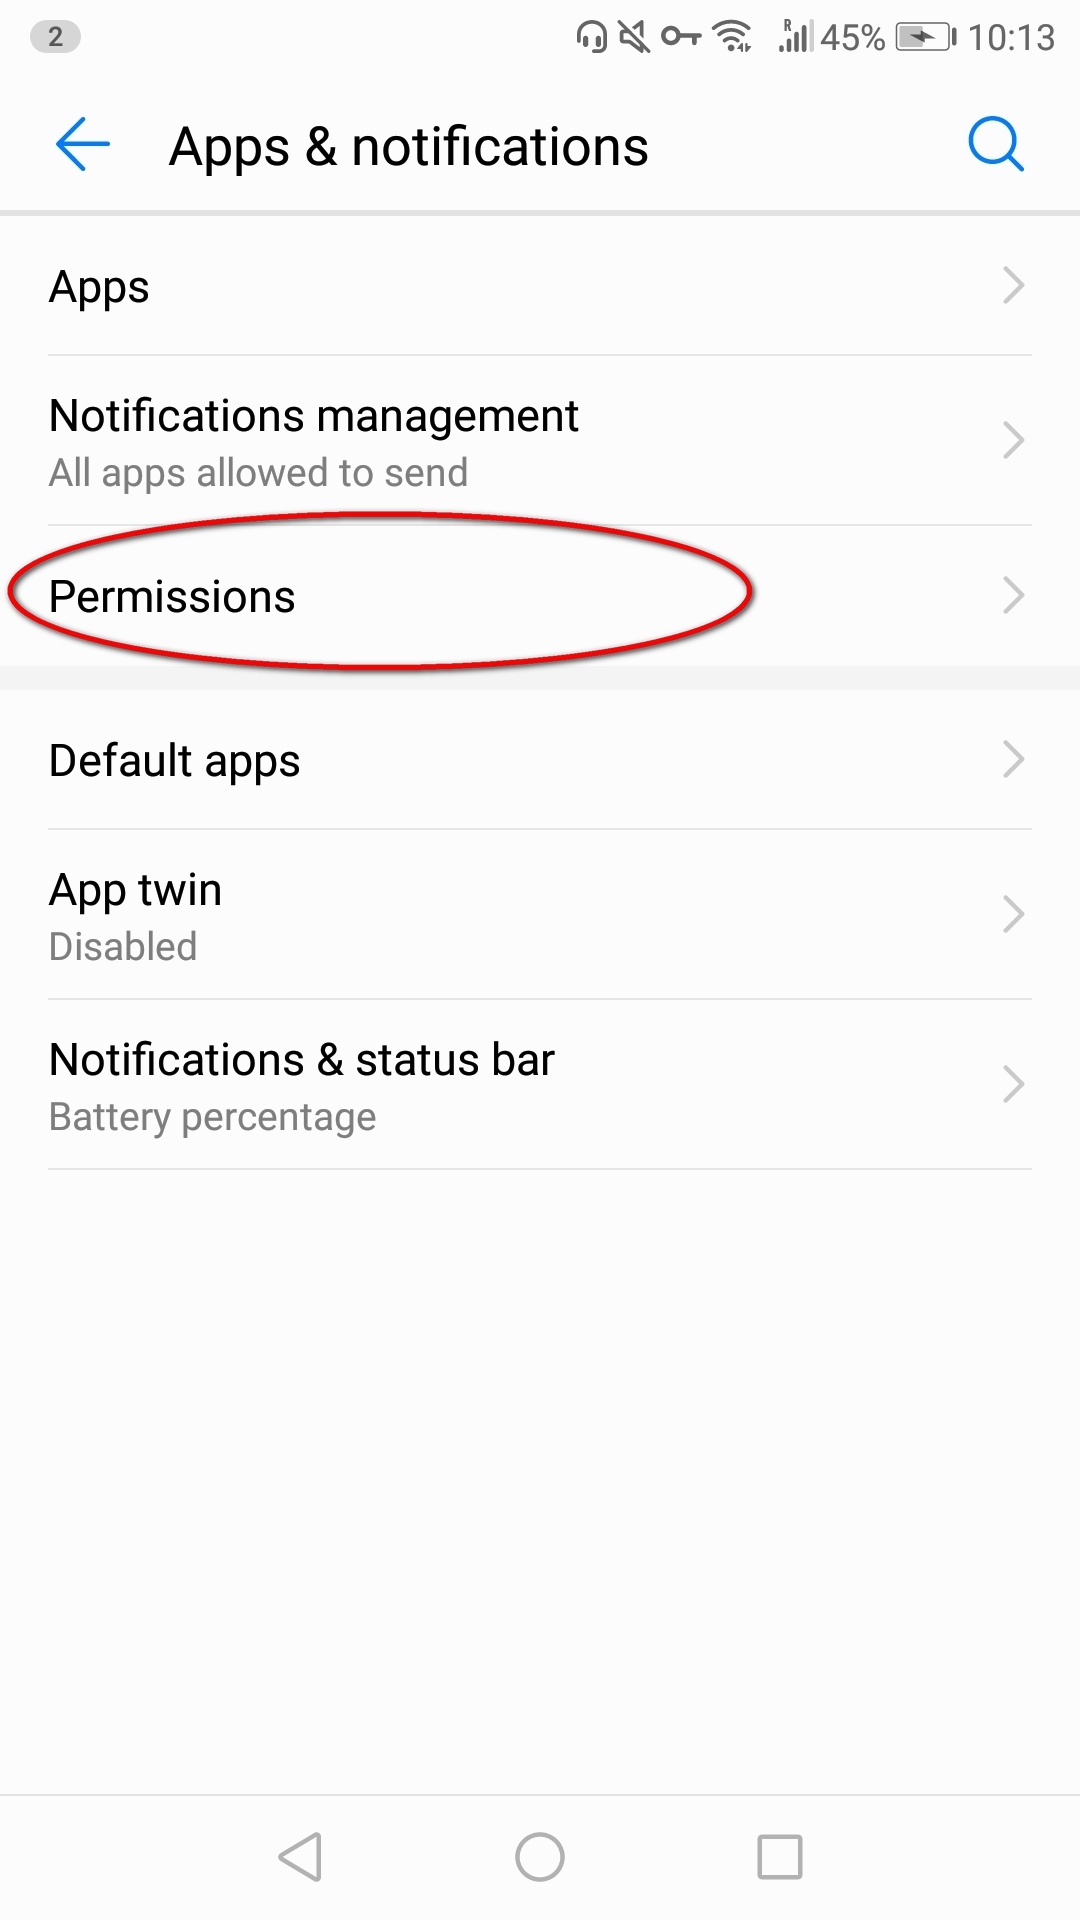 _apps___notifications_highlight